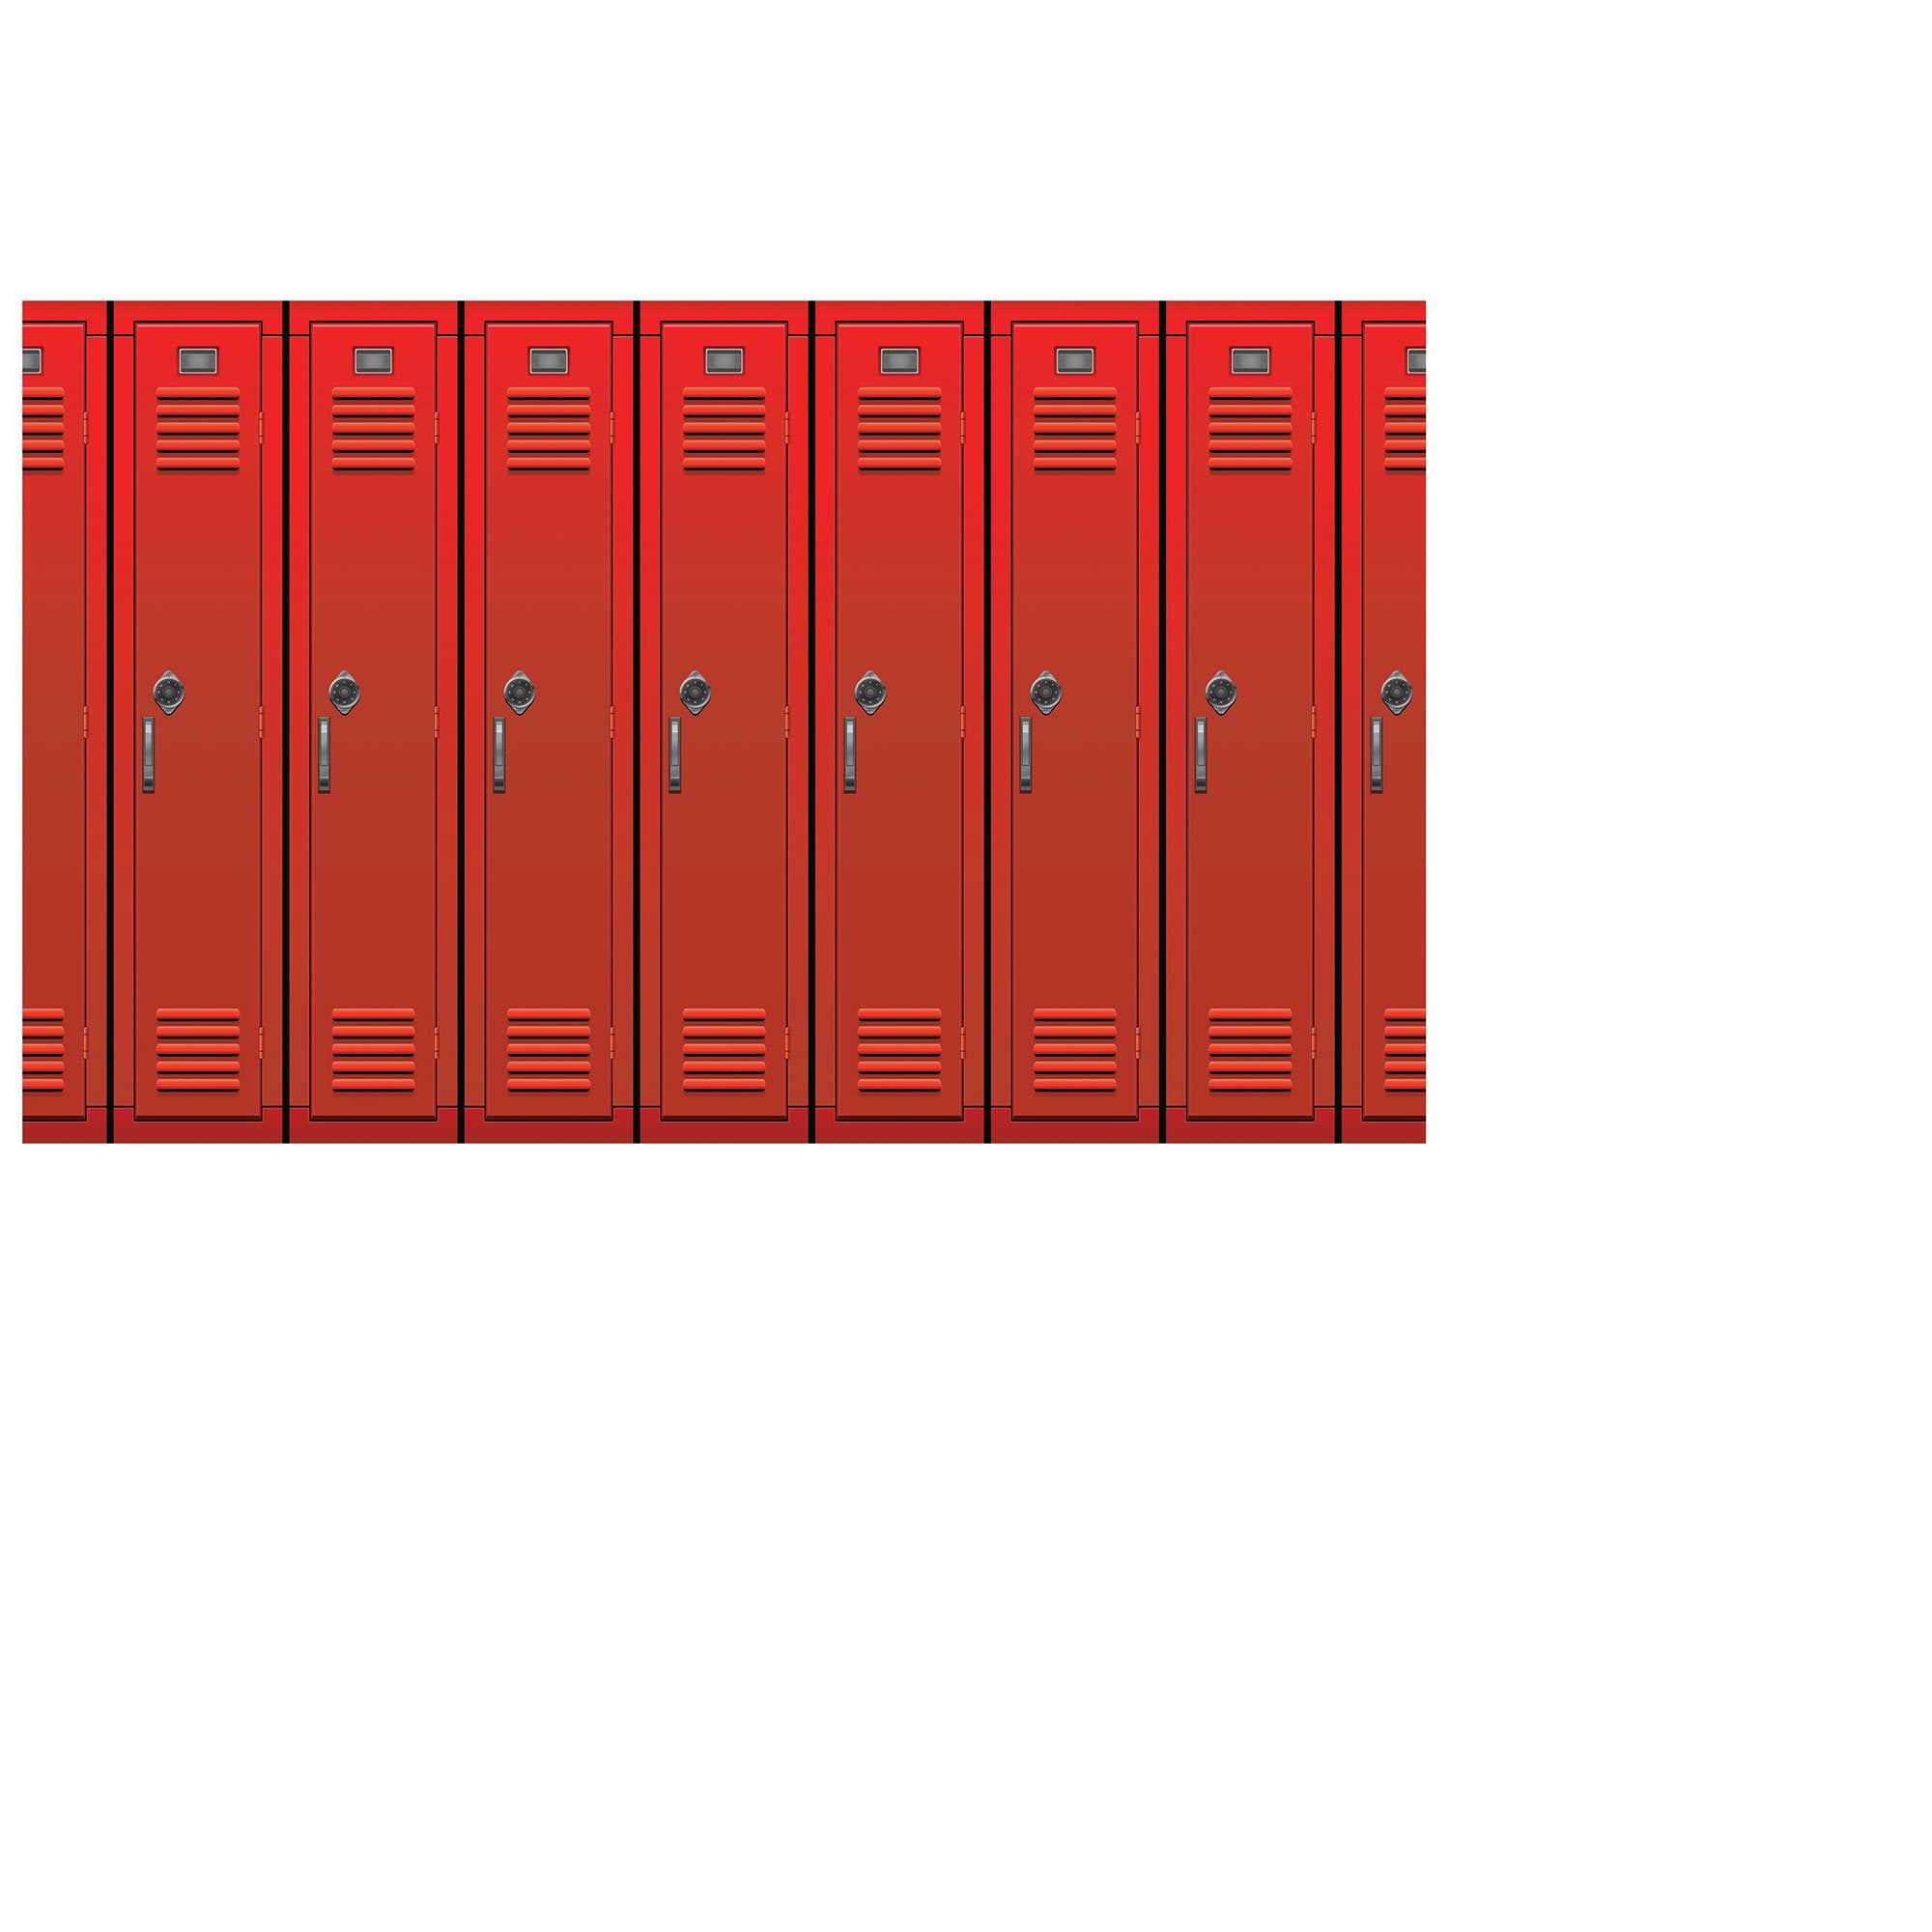 Red School Lockers Photo Backdrop 4 x 30-1 Pc.